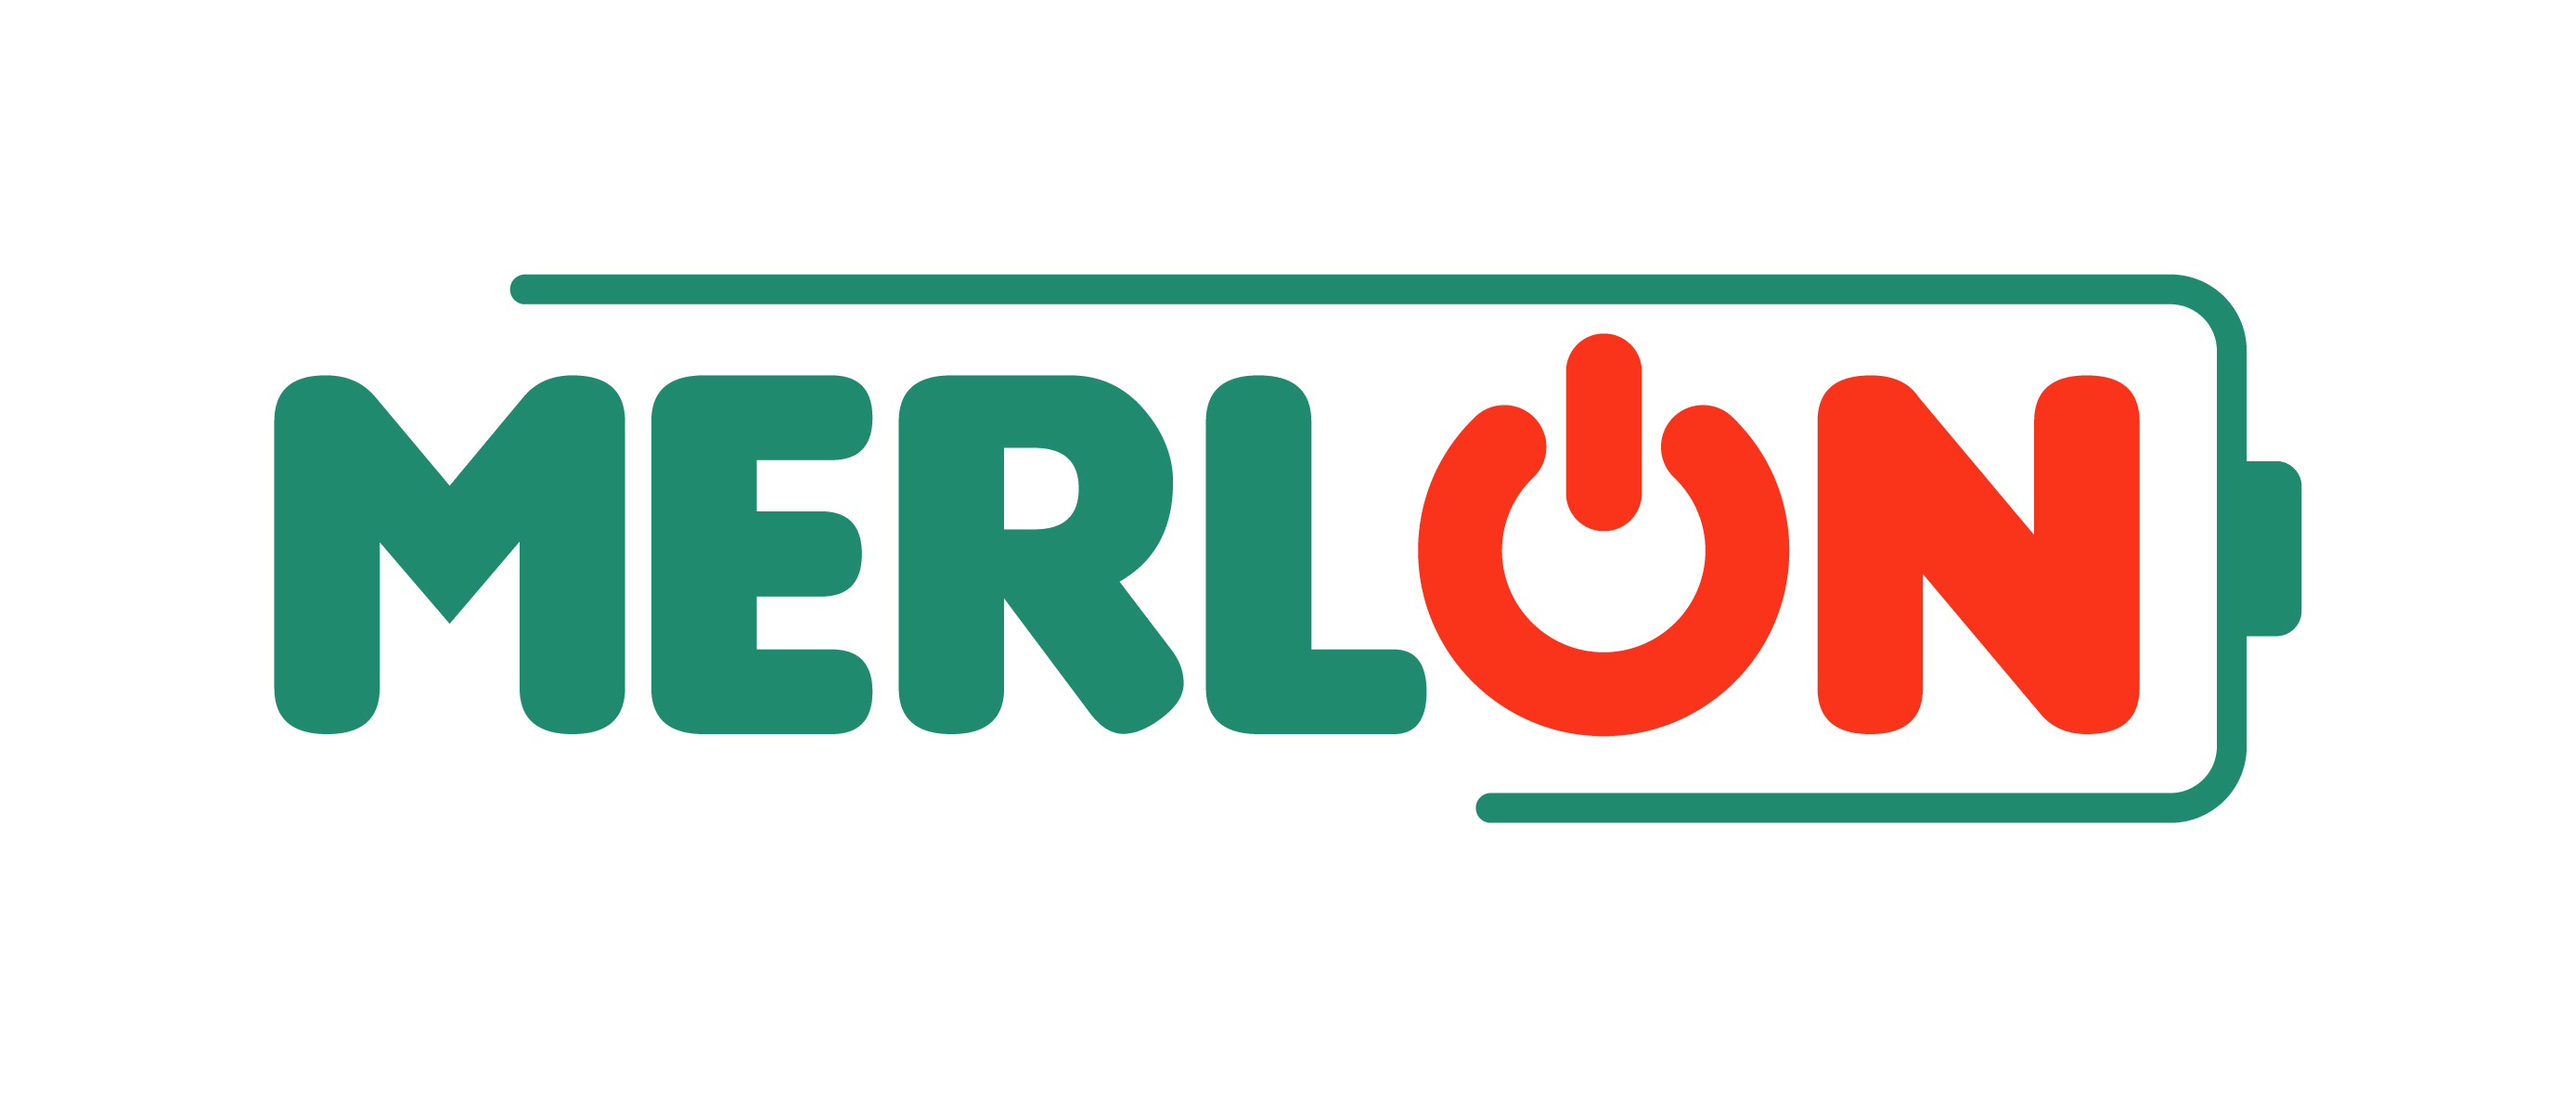 Merlon Logo